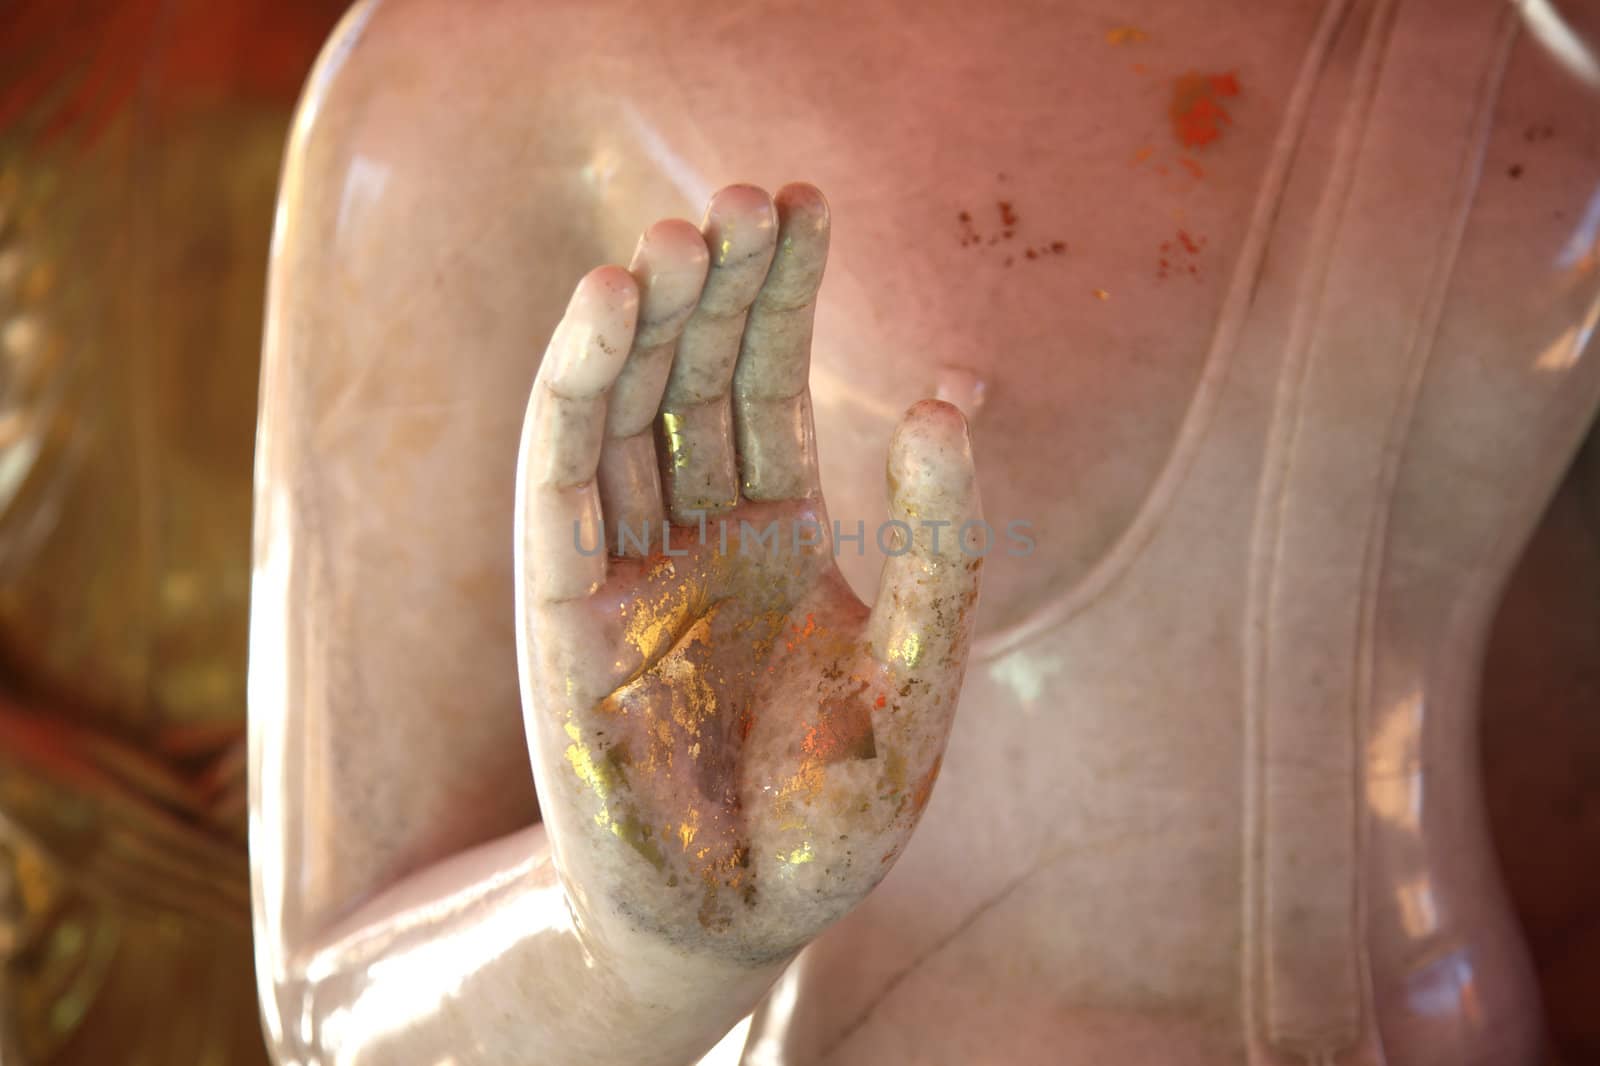 Buddha's hand raised one with gold plated - horizontal